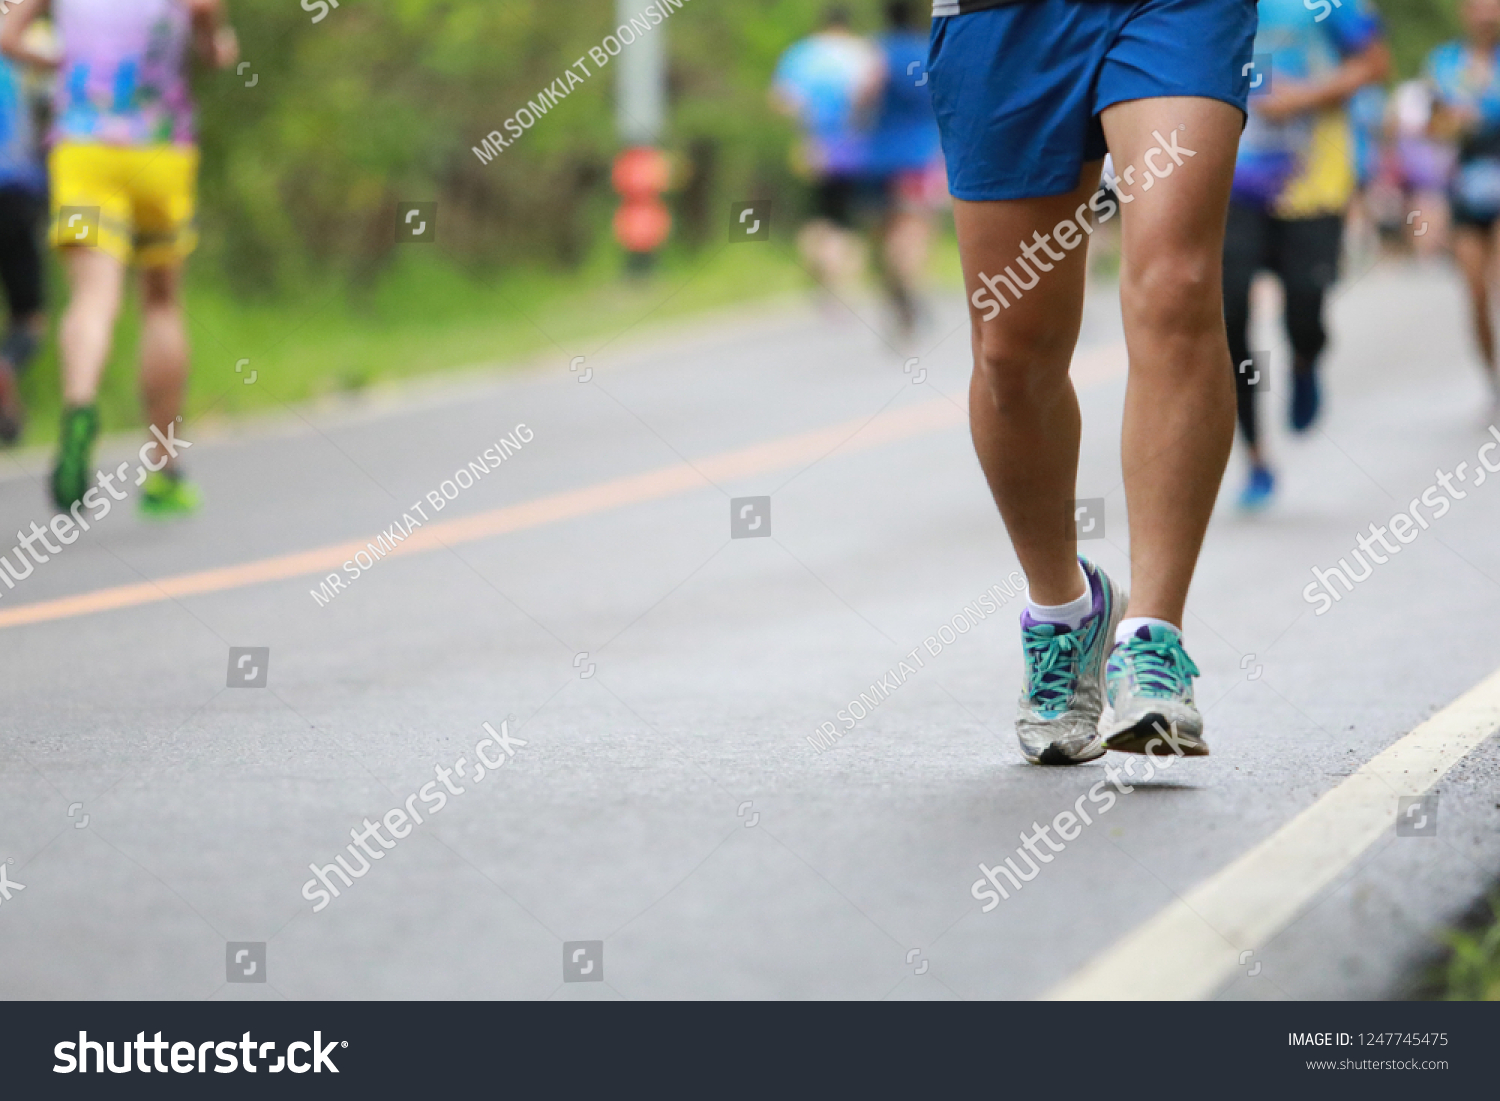 Group of people running race marathon #1247745475